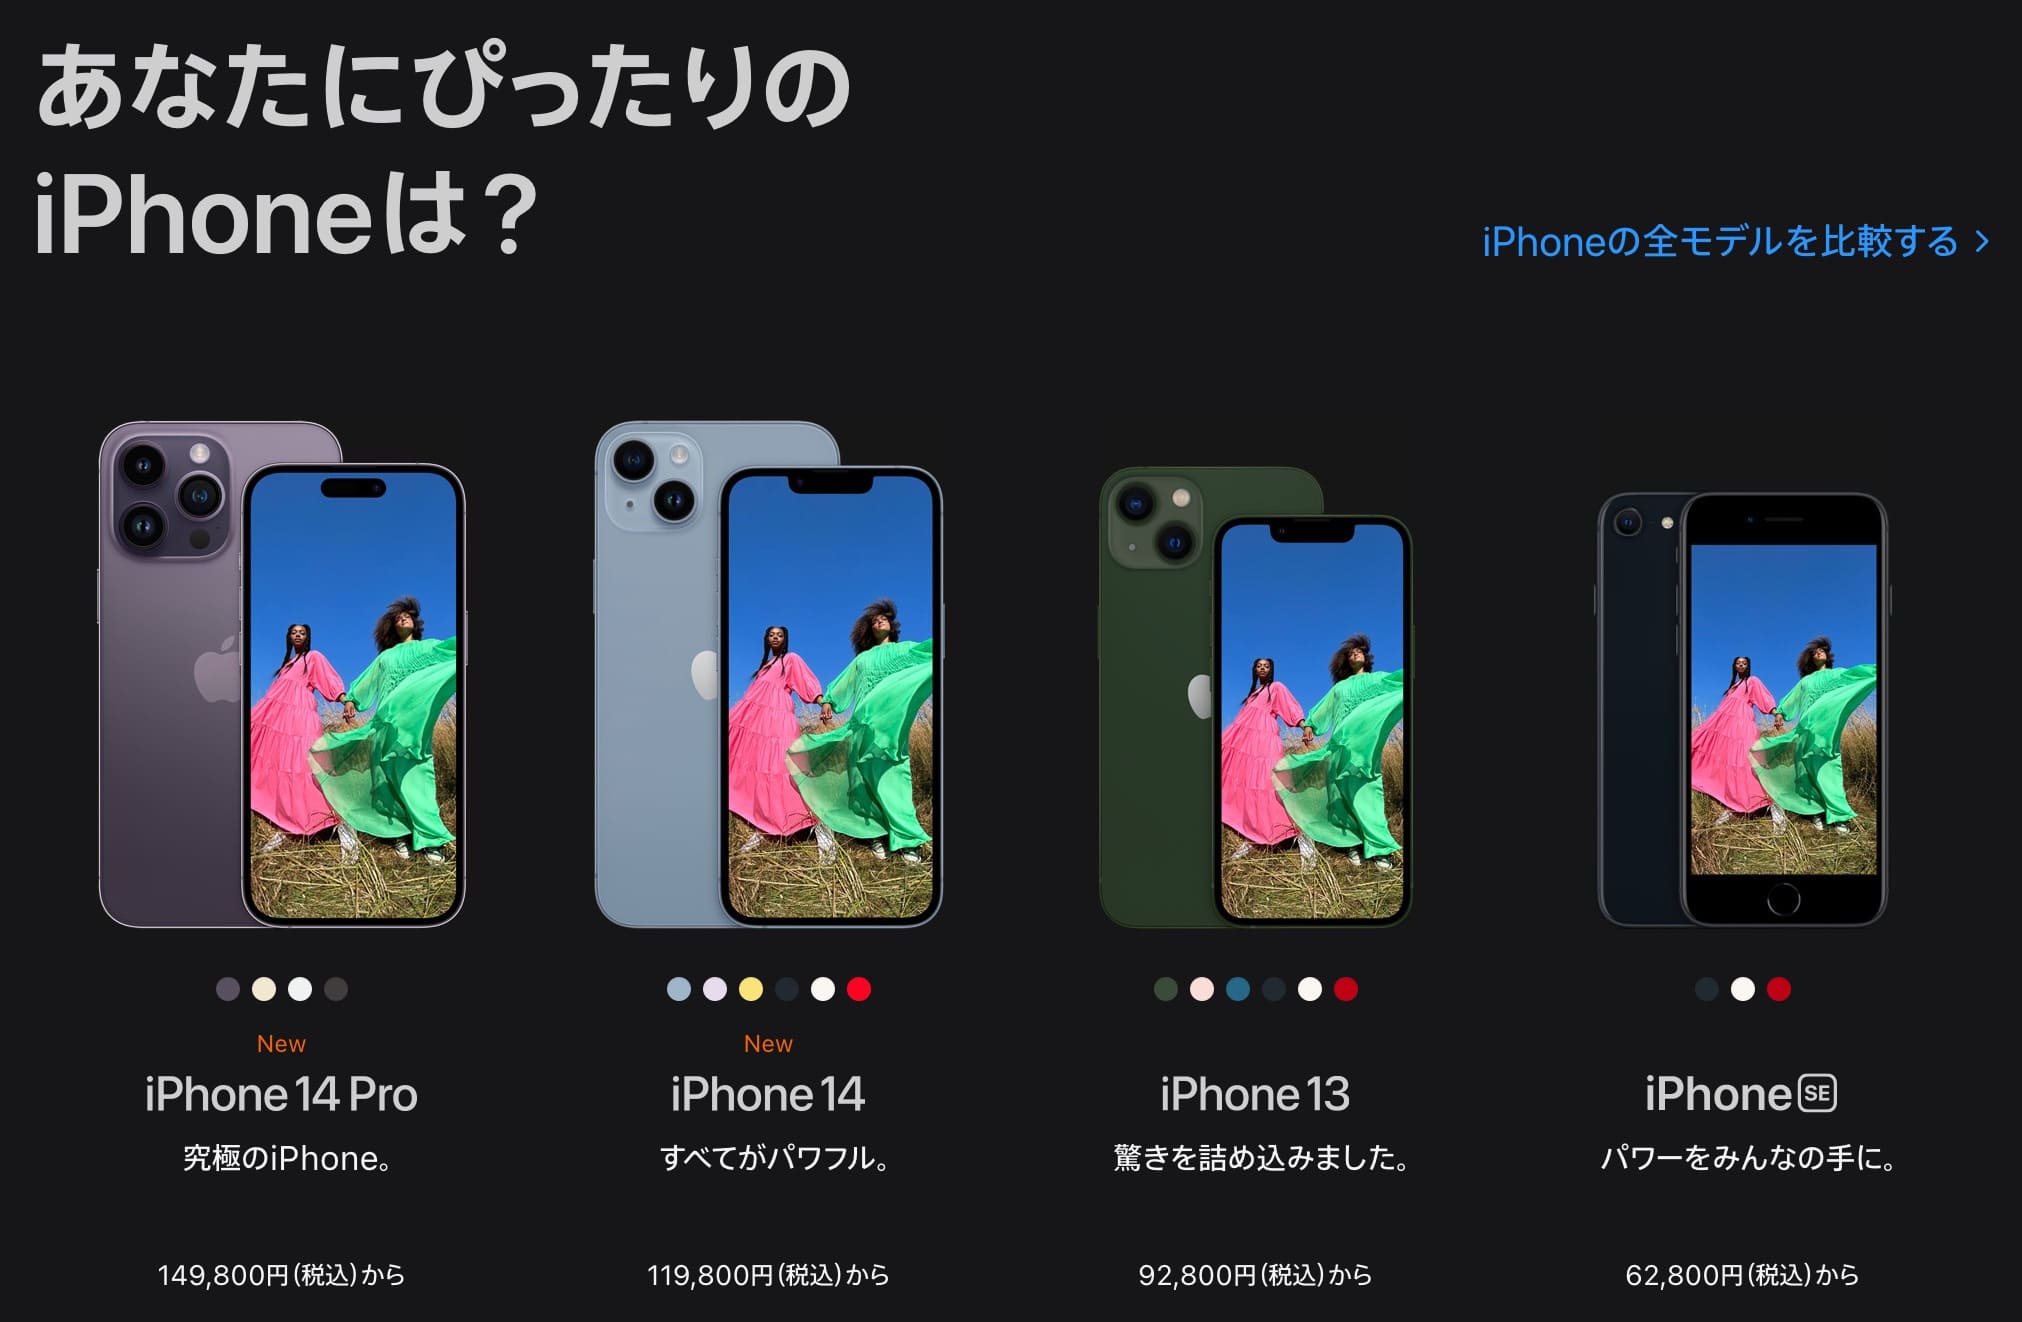 “iPhone価格”